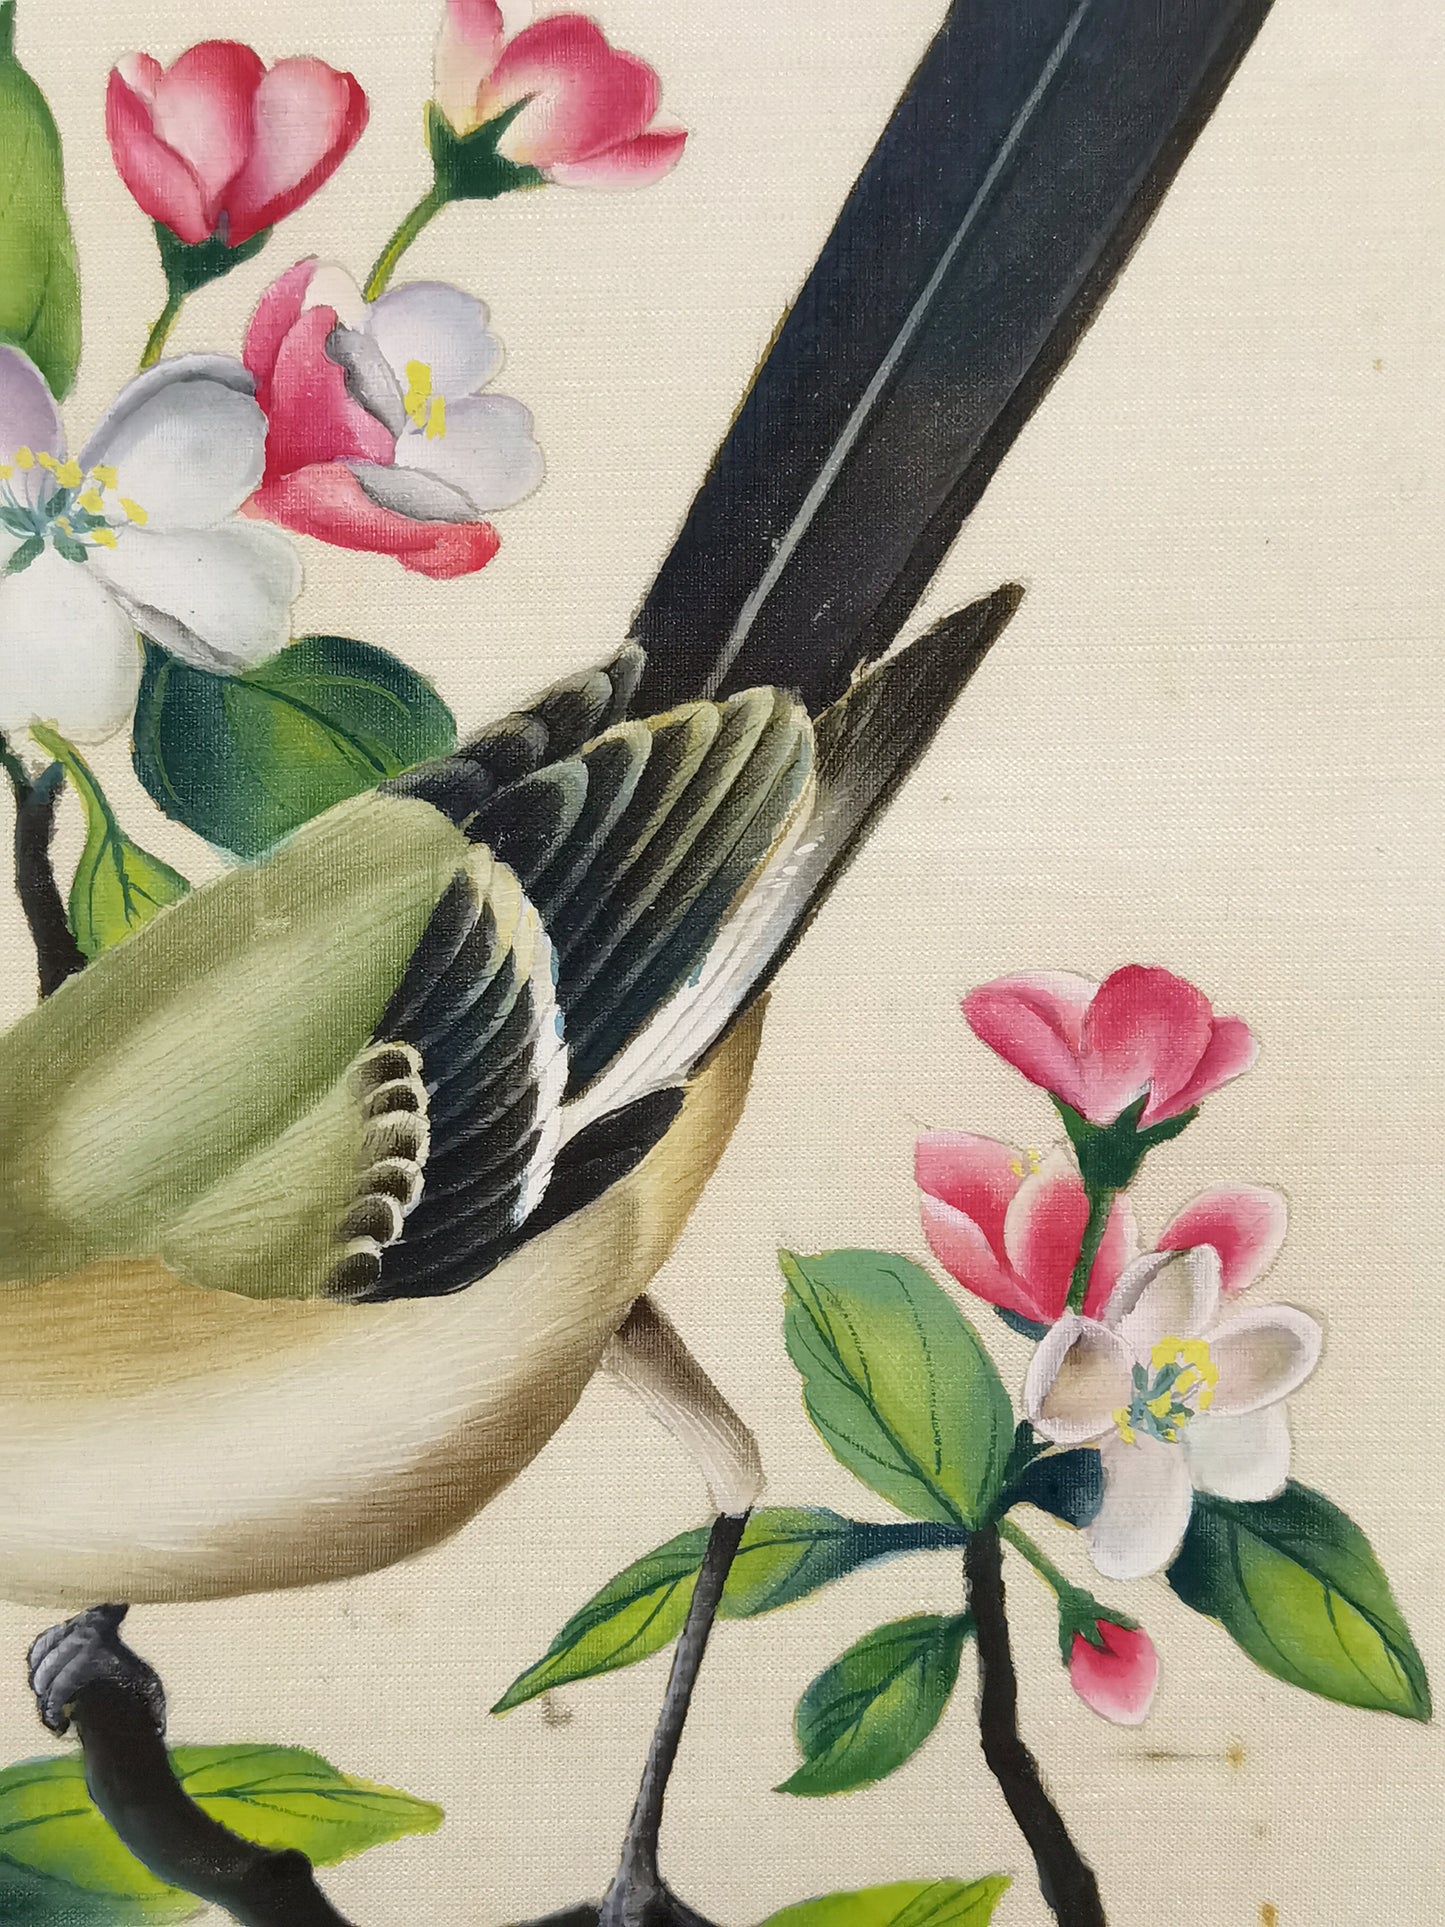 Northern Mockingbird State Bird Handmade Art Printing Arkansas Apple Blossom with Wood Frame